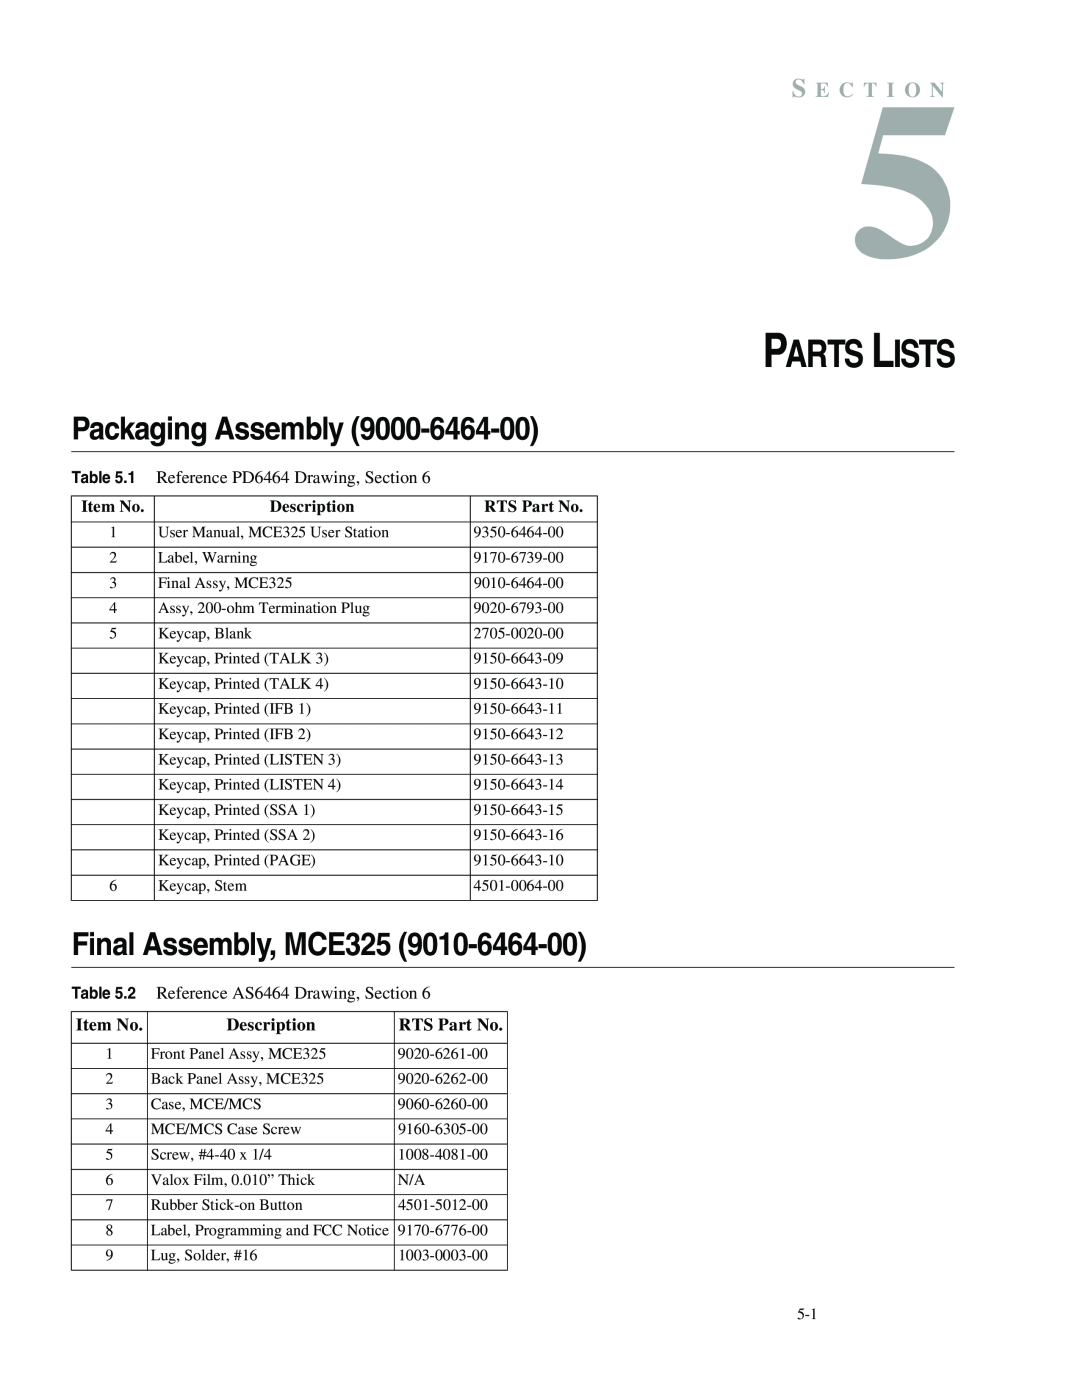 Telex manual Parts Lists, Packaging Assembly, Final Assembly, MCE325, S E C T I O N, Item No, Description, RTS Part No 